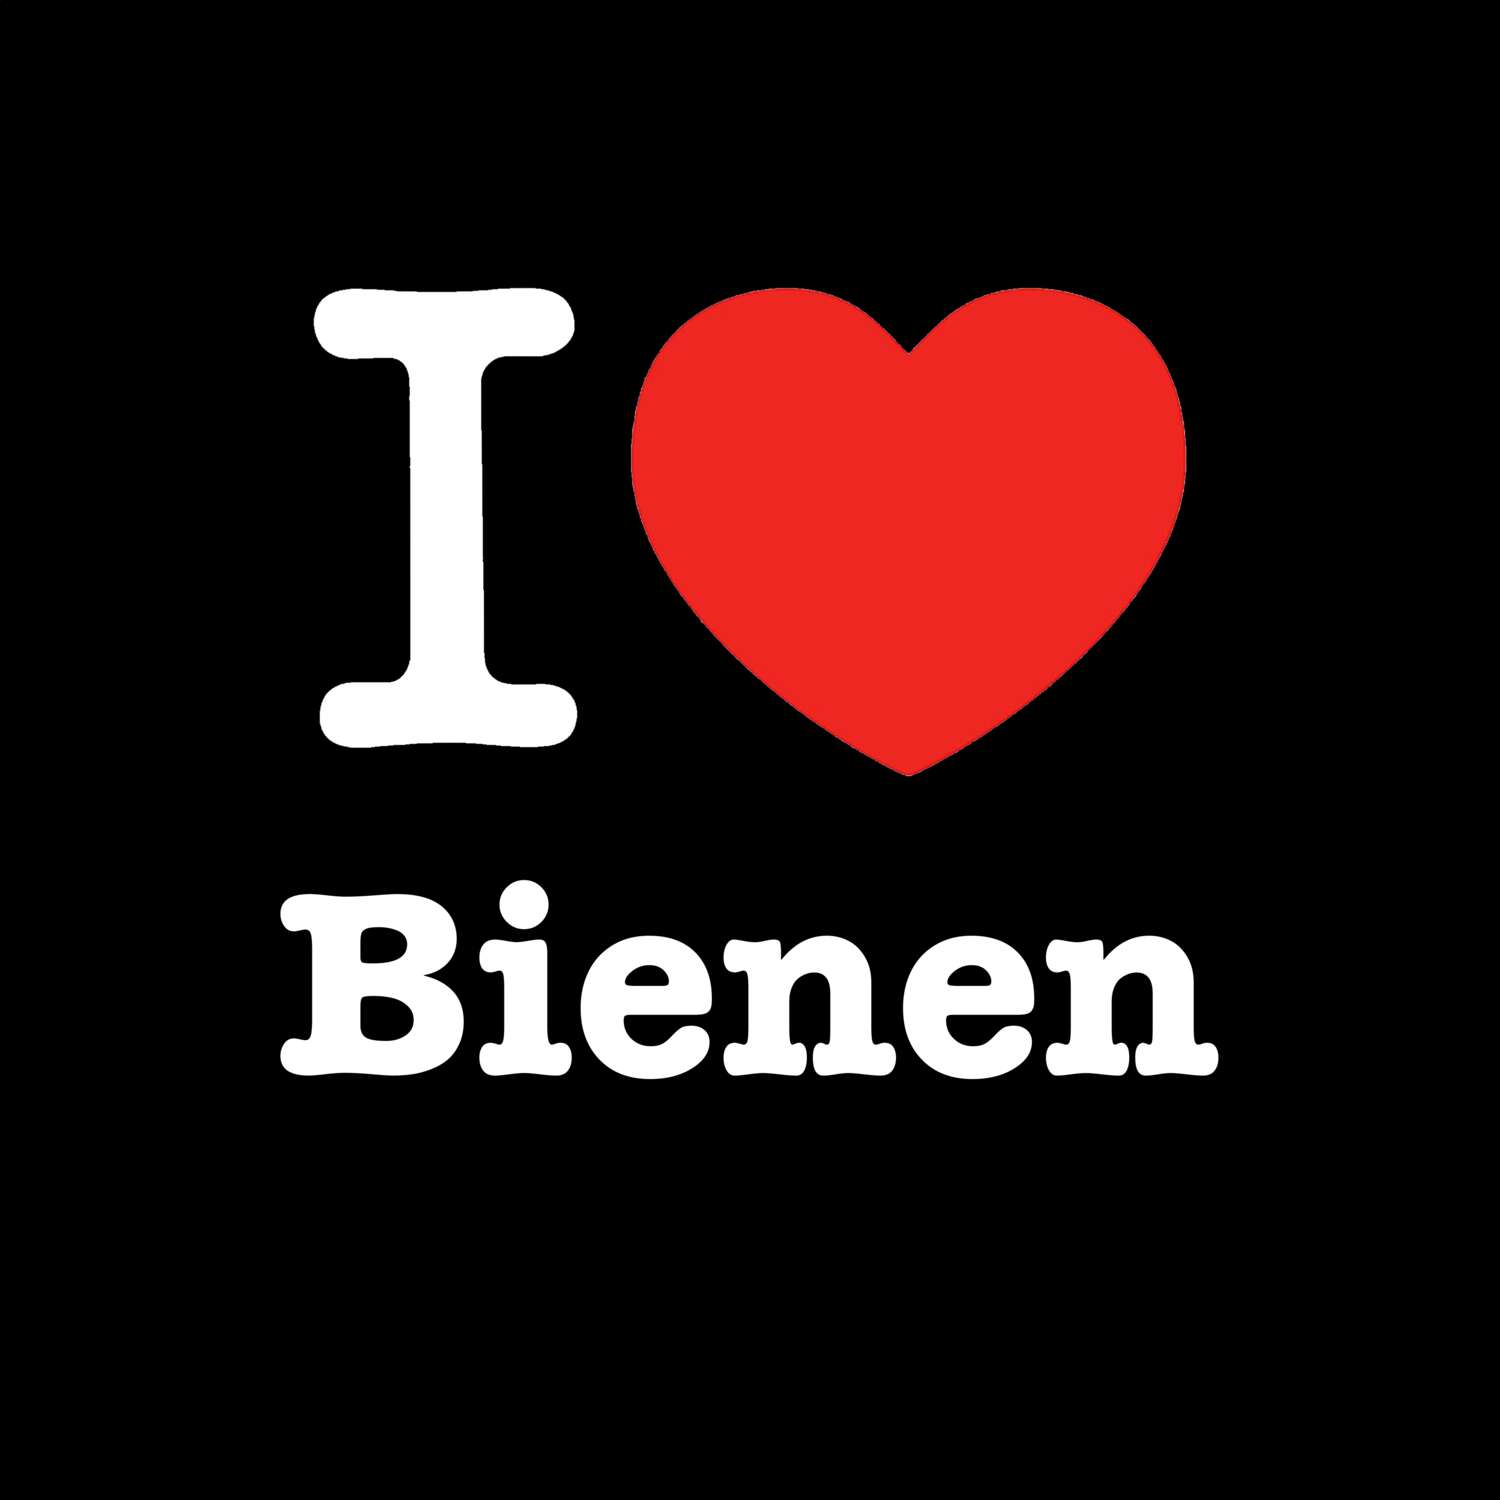 Bienen T-Shirt »I love«